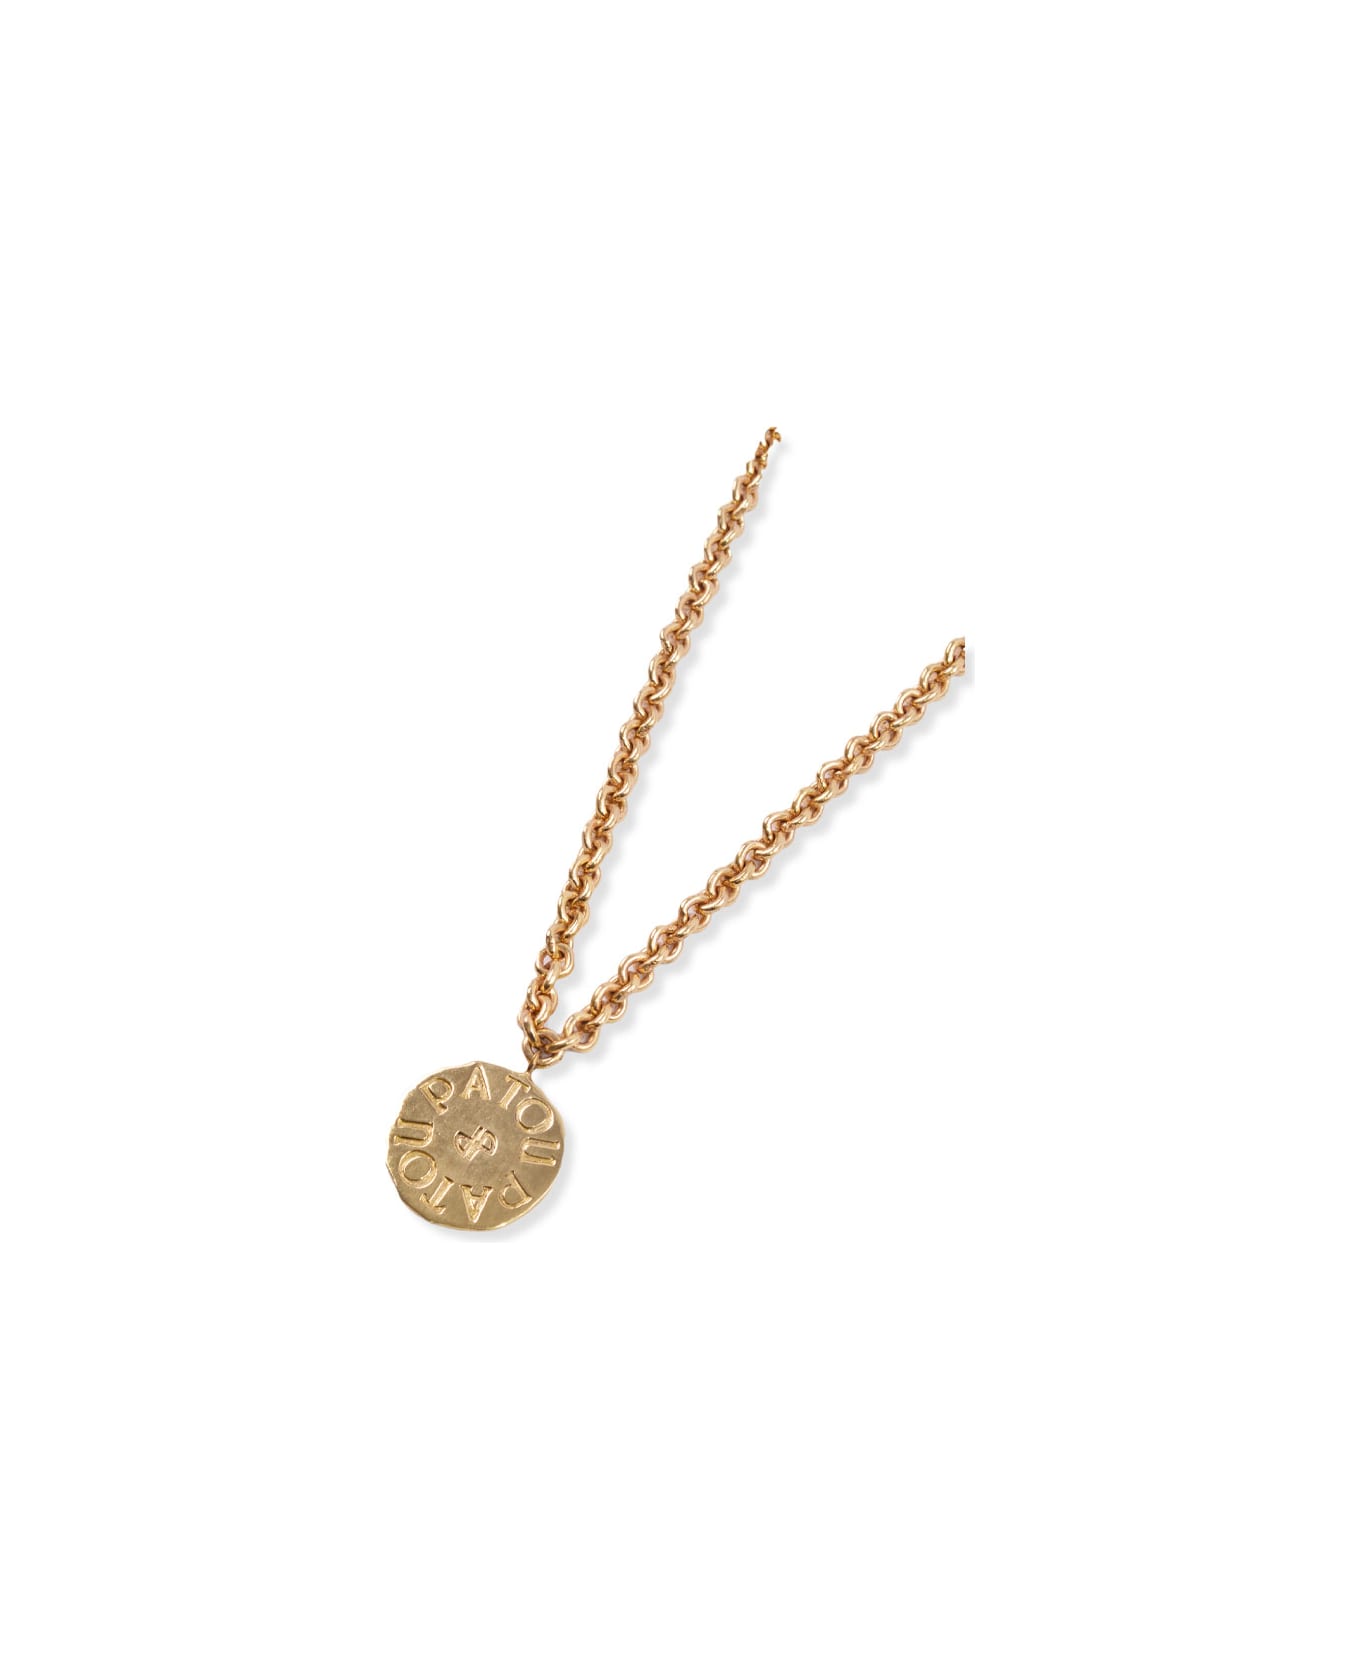 Patou Necklace With Patou Coin Pendant - Golden